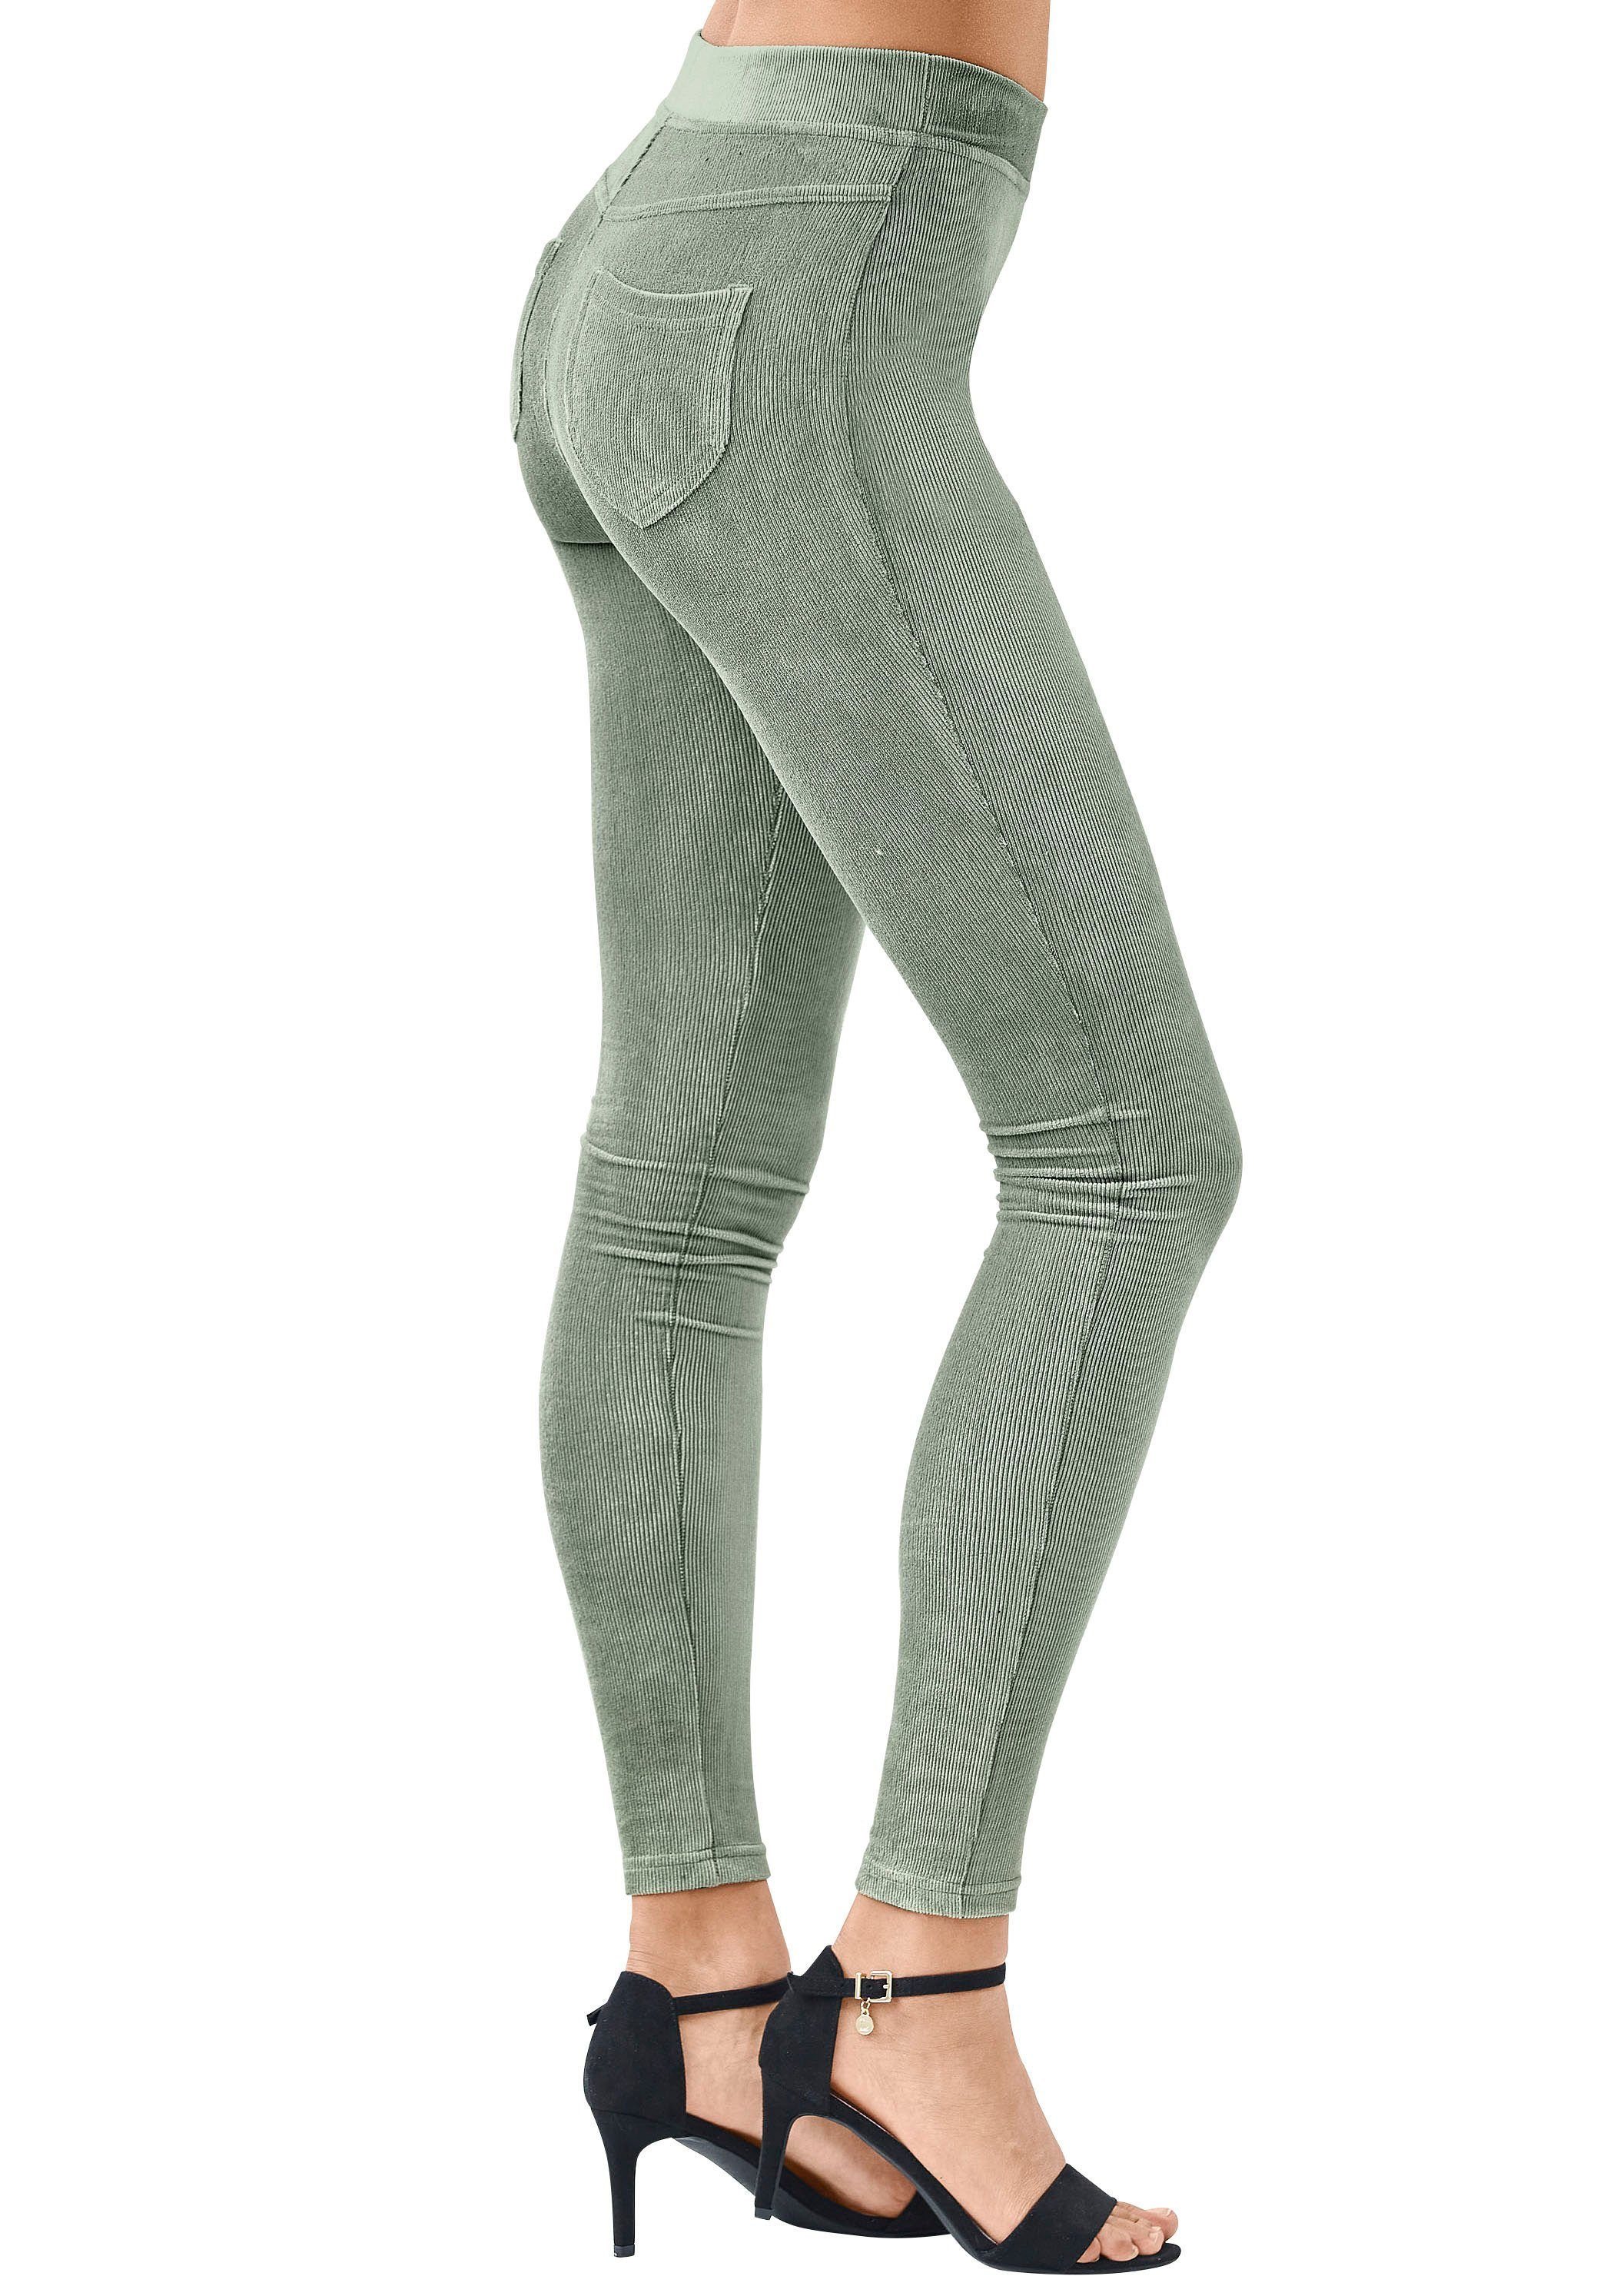 grün Cord-Optik, mint in weichem LASCANA aus Loungewear Material Leggings